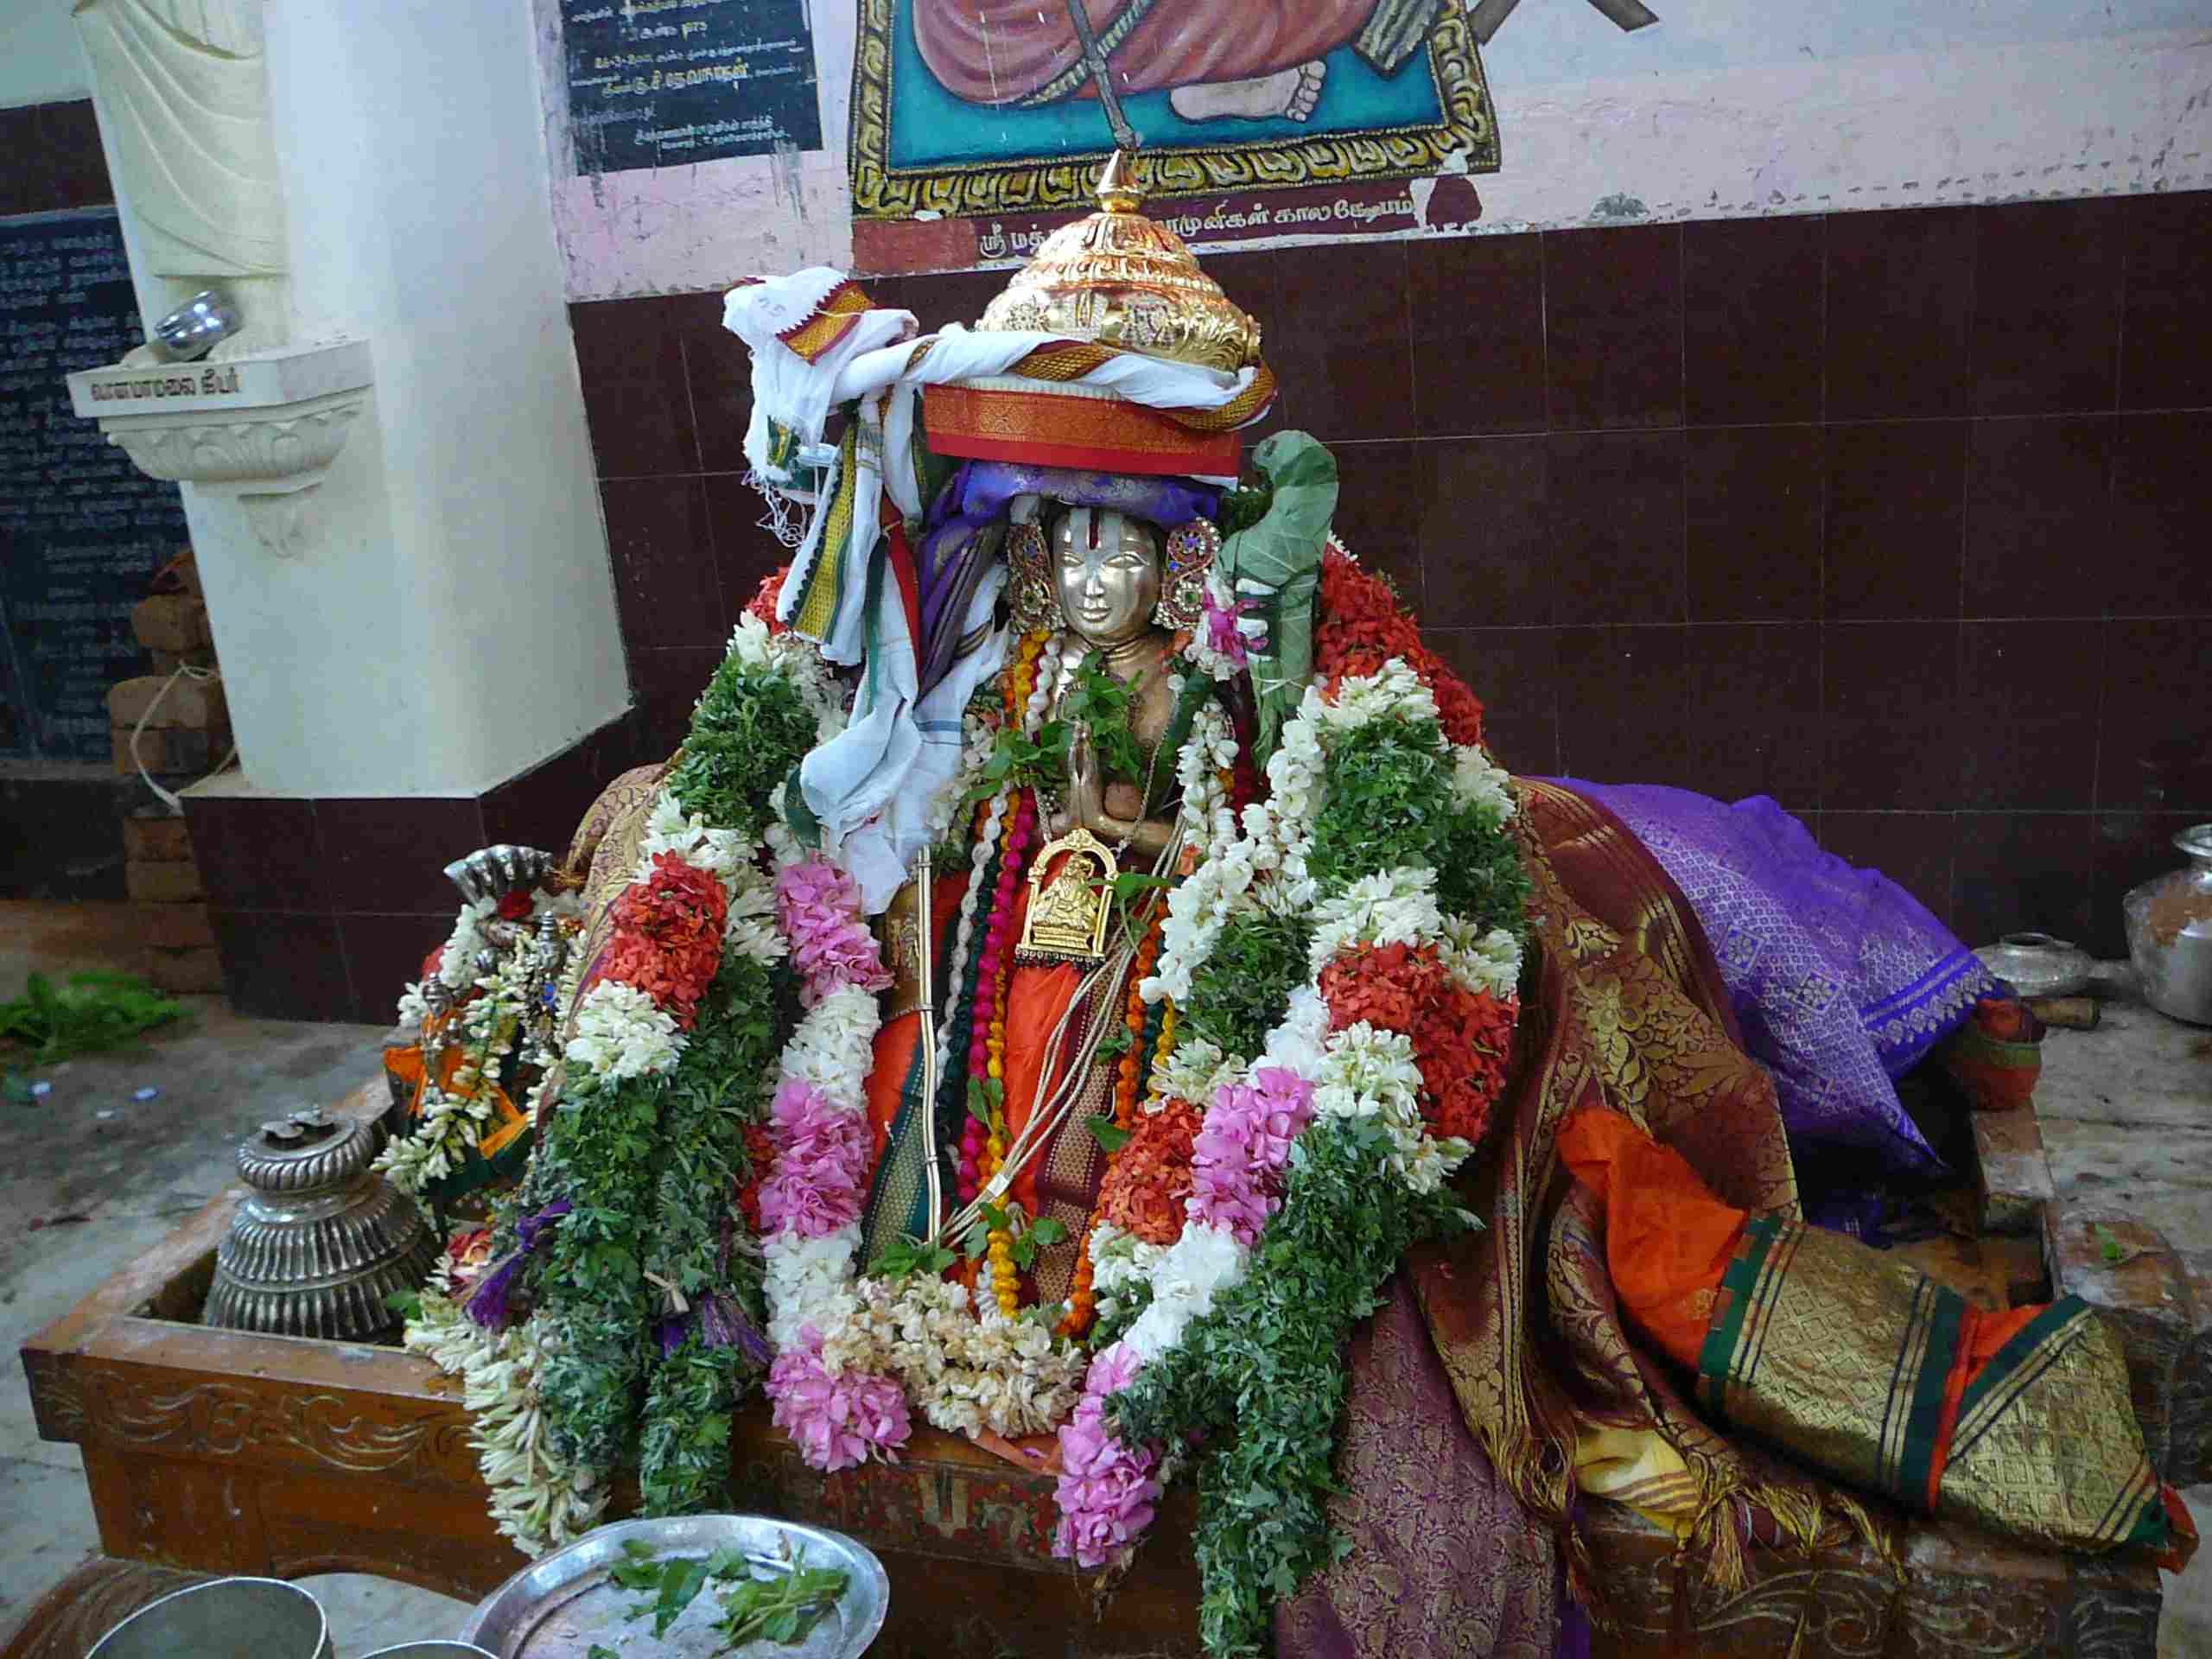 Namperumalukku Acharyanana Eetu Perukkar with Divyadesa Emperuman Uduthu Kalaintha Thirumaalai and Thirupariyattam.jpg